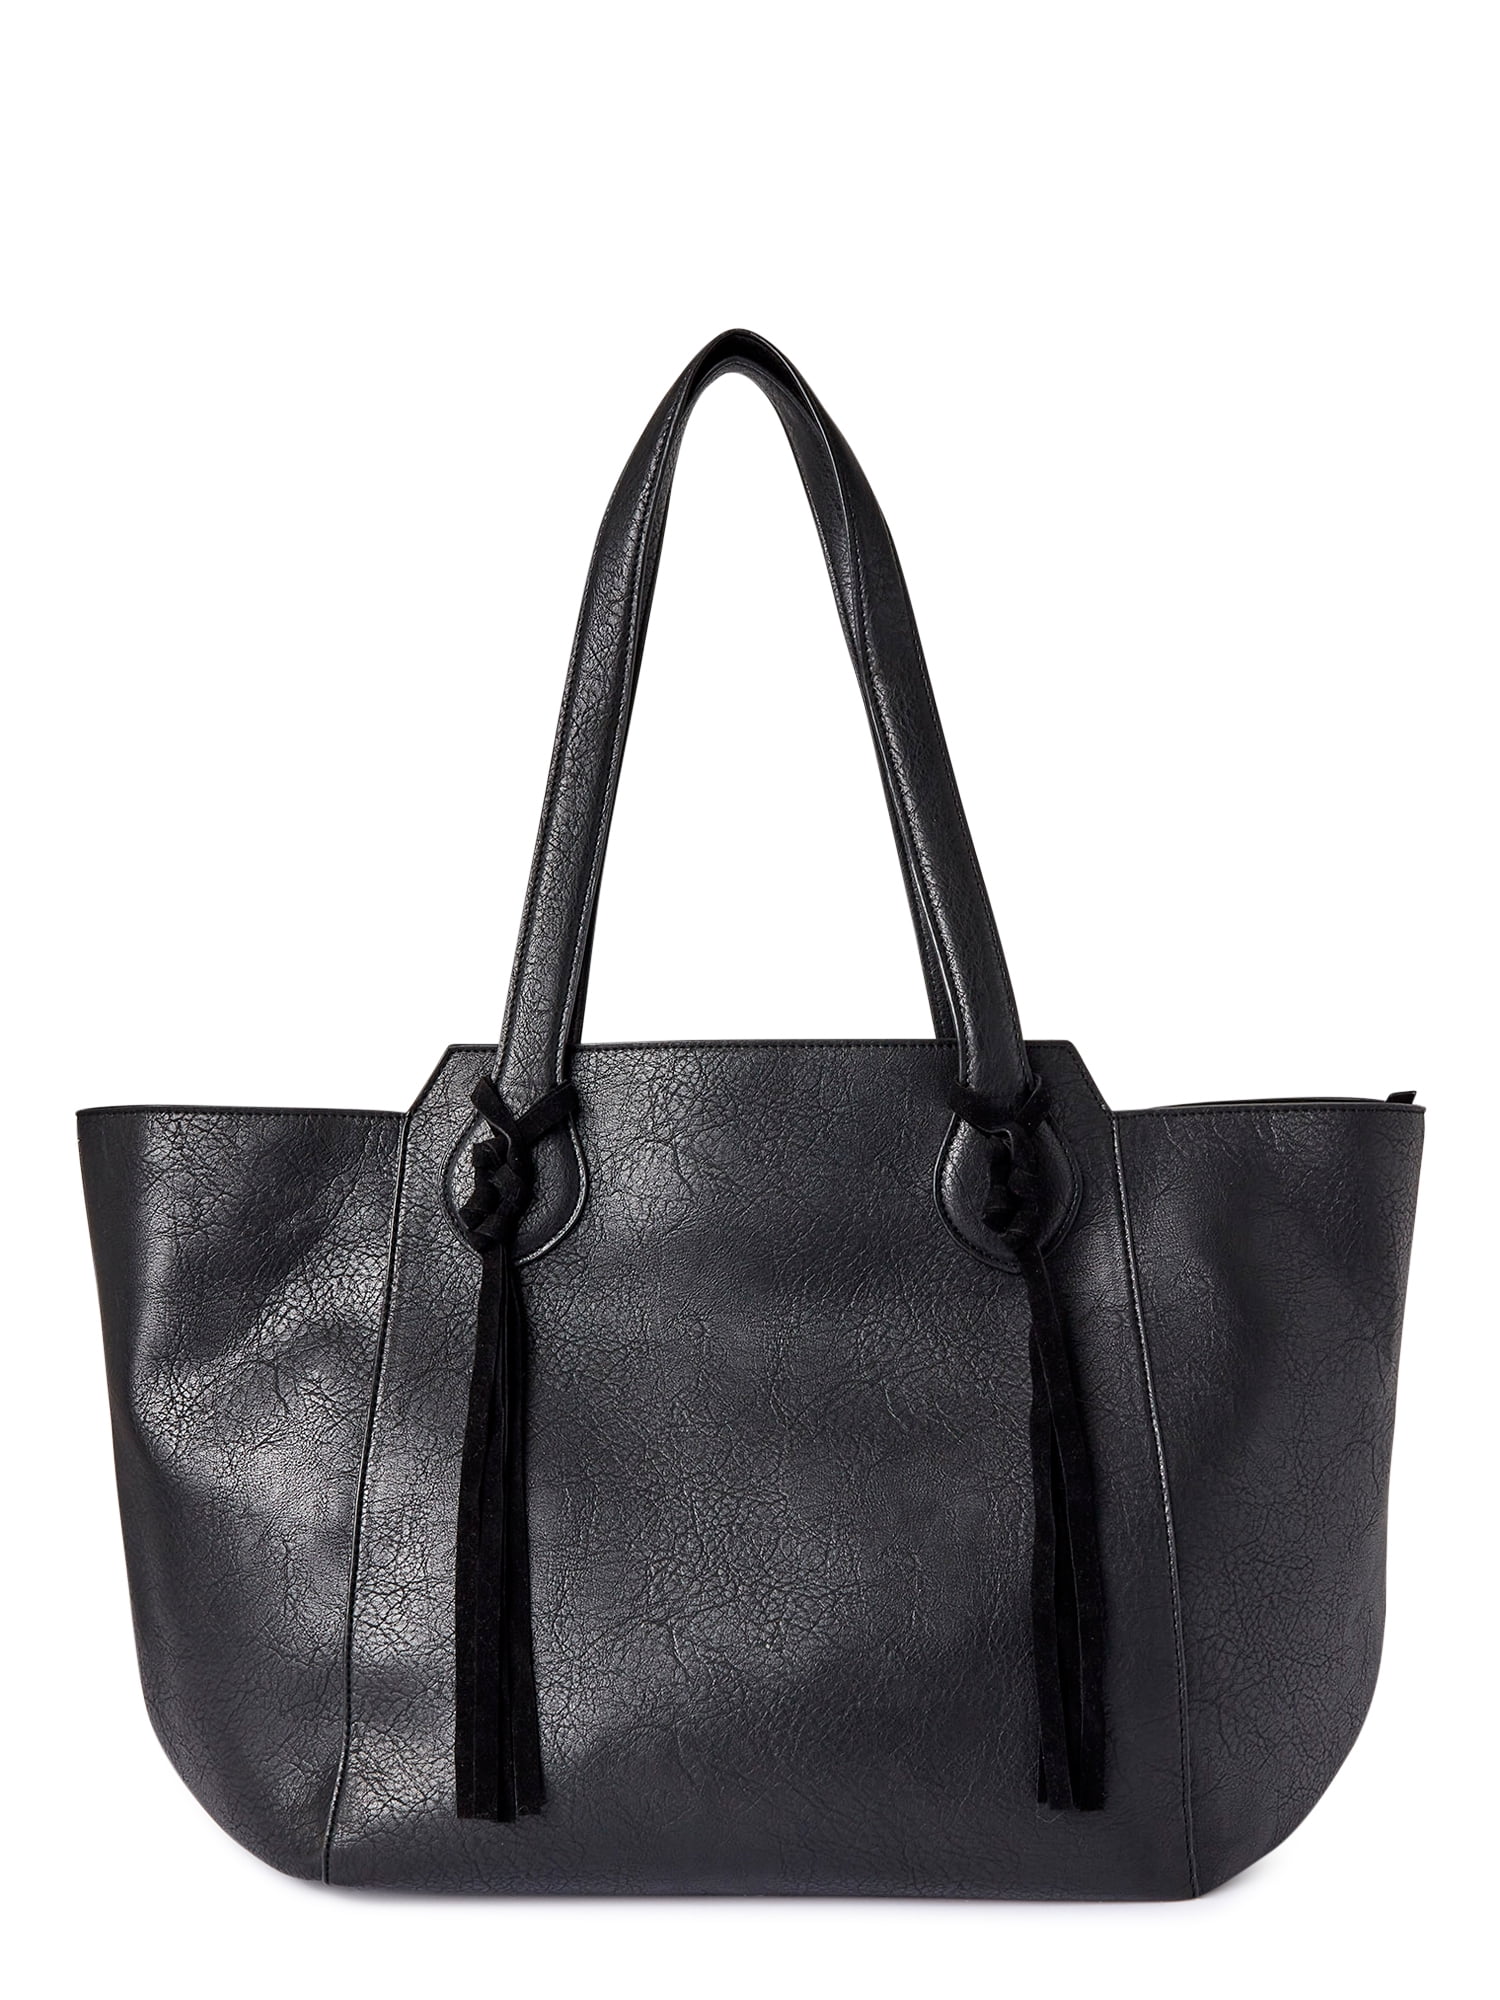 Time and Tru Women’s Dakota Tote Handbag Black